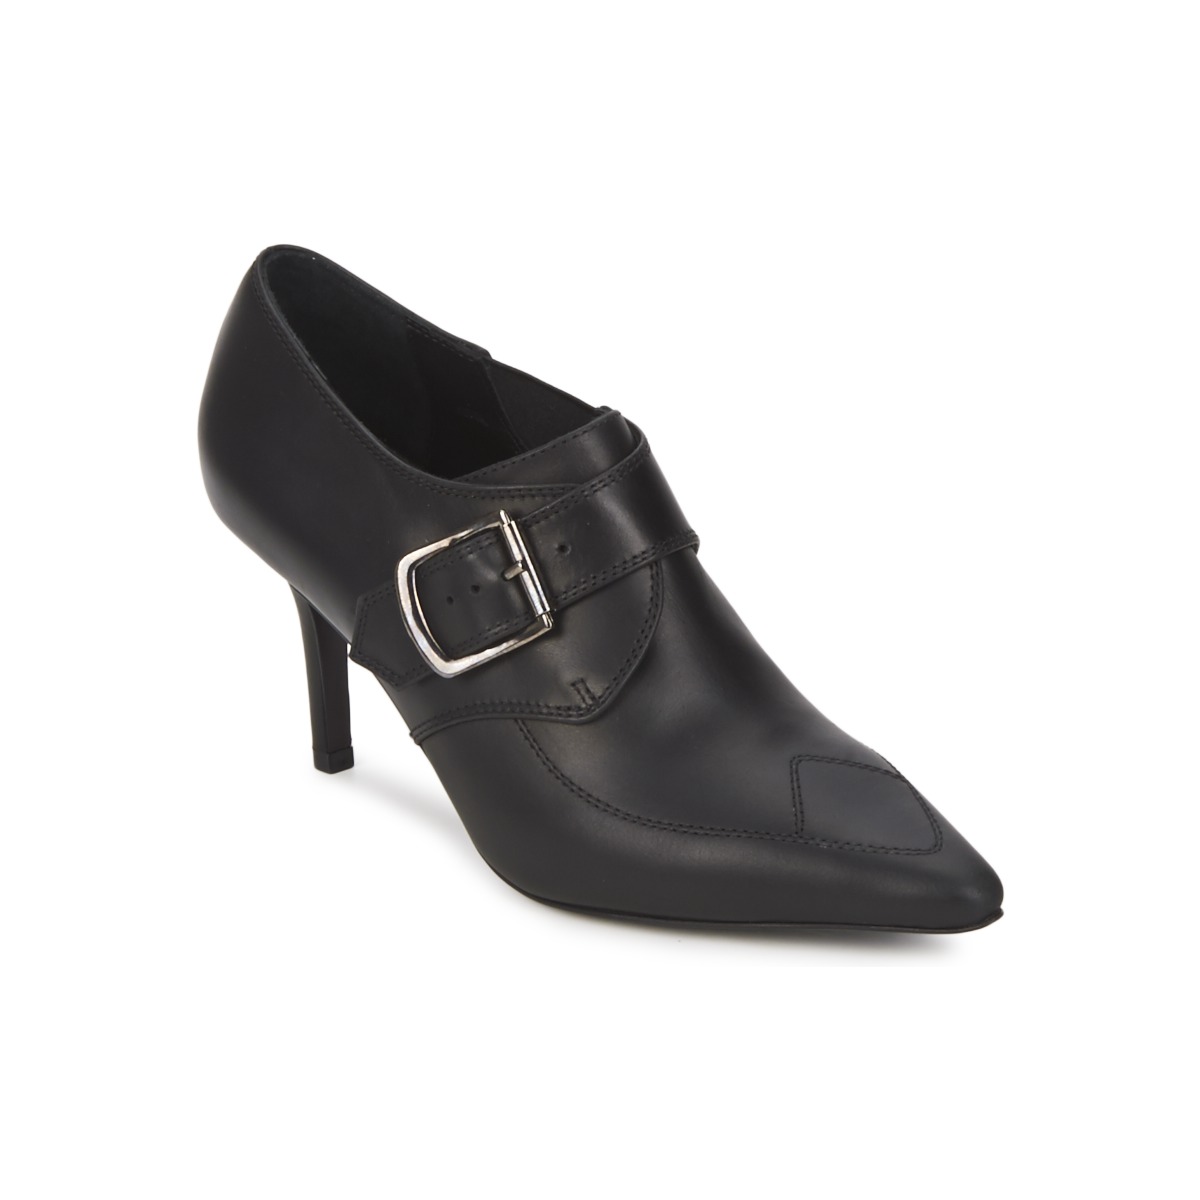 Cipők Női Félcipők Vivienne Westwood WV0001 Fekete 